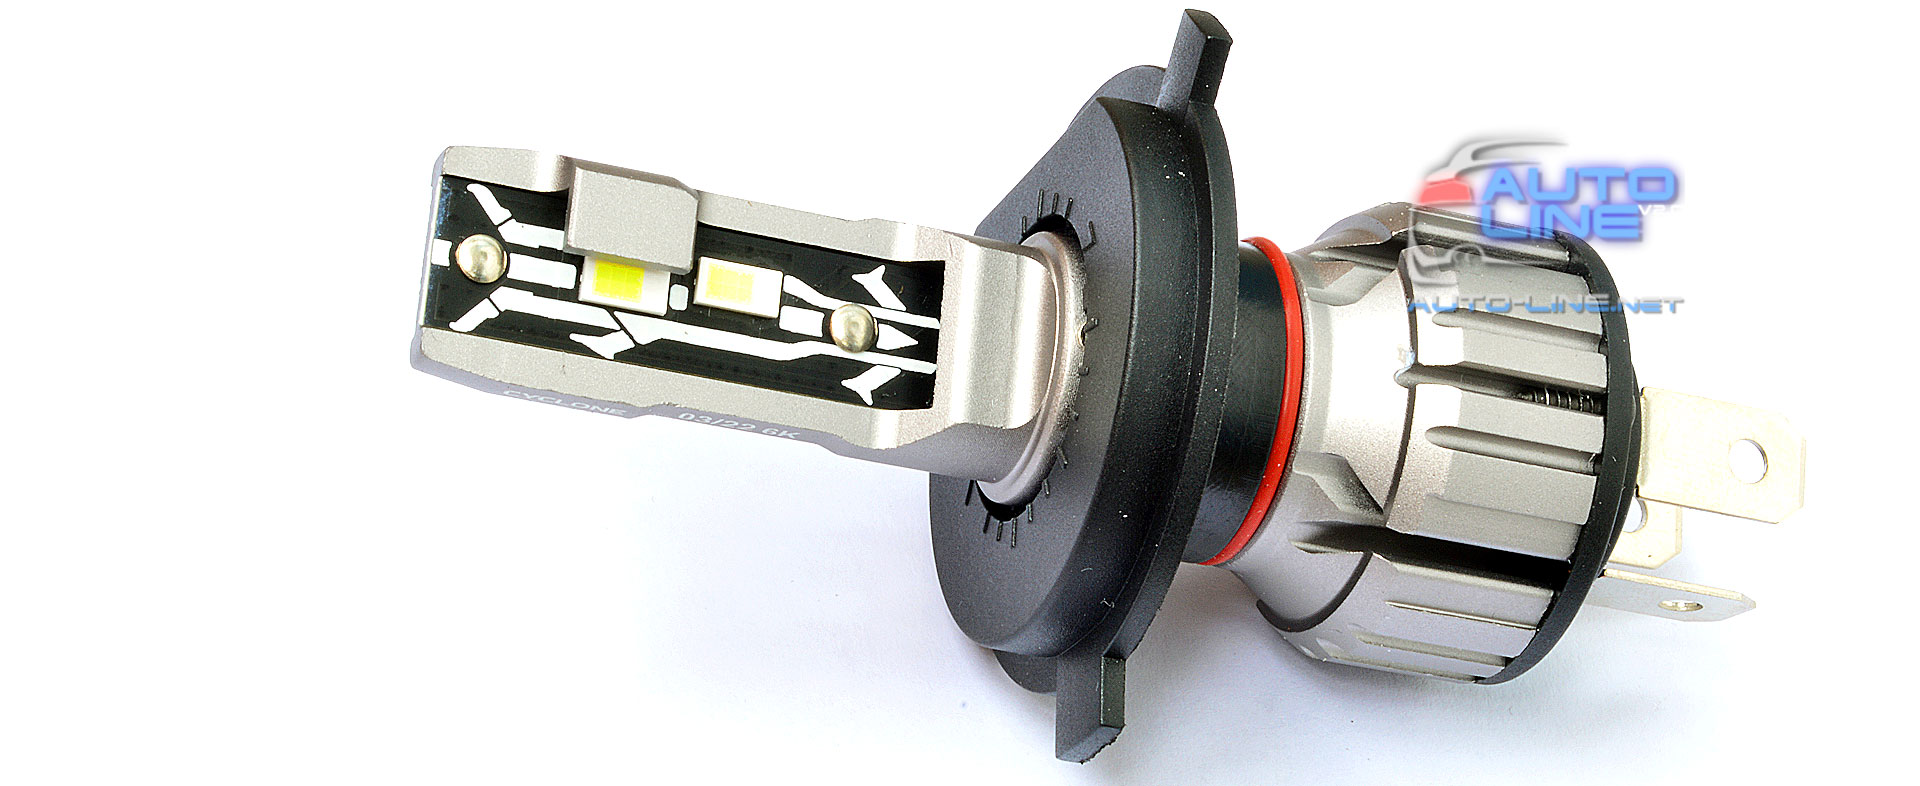 Cyclone LED H4 H/L 6000K type 32 — автомобильная LED-лампа H4 с пассивным охлаждением